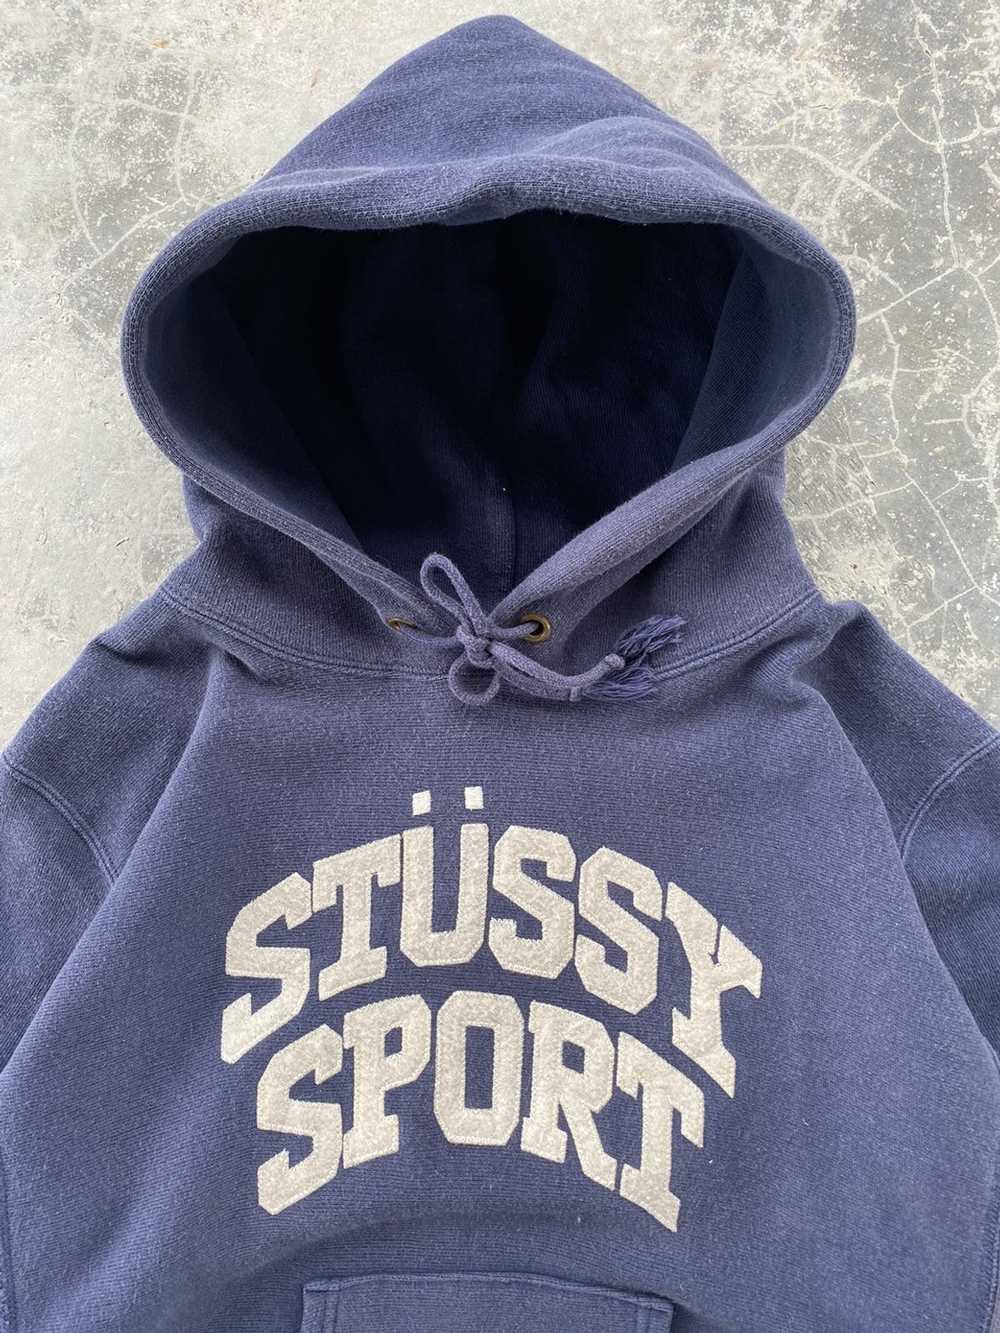 Stussy 2016 Stussy x Champion - image 3